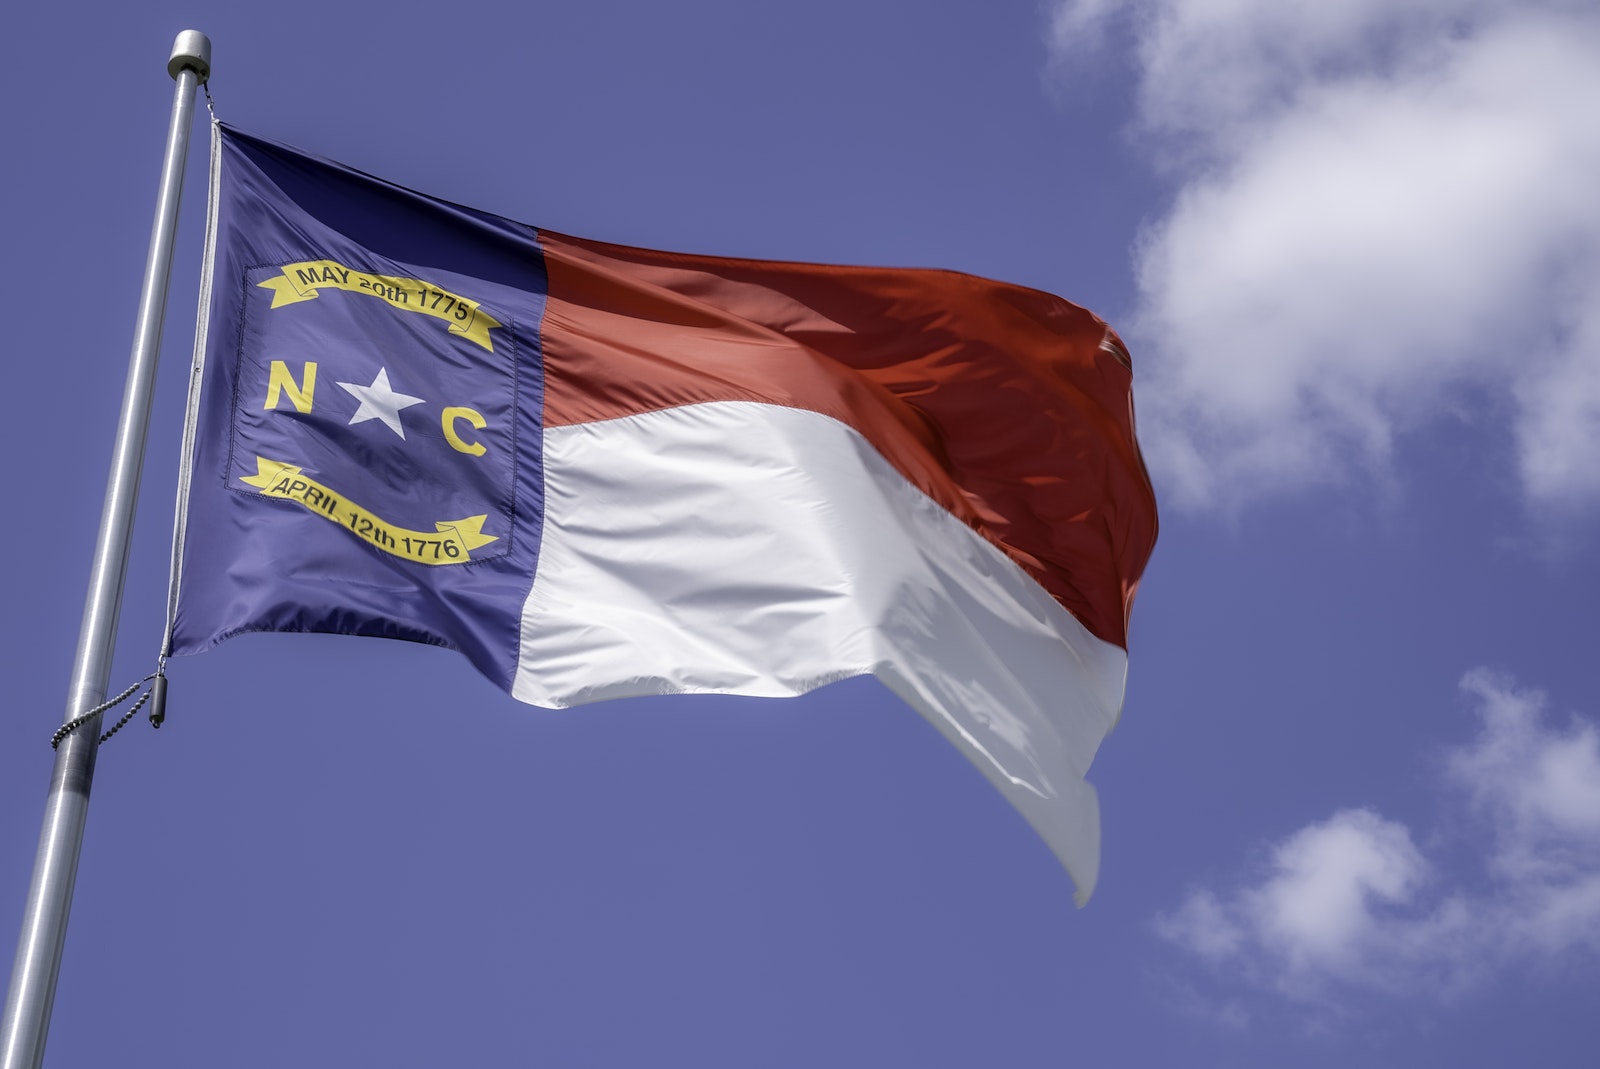 North Carolina Flag on a Pole Under Blue Sky